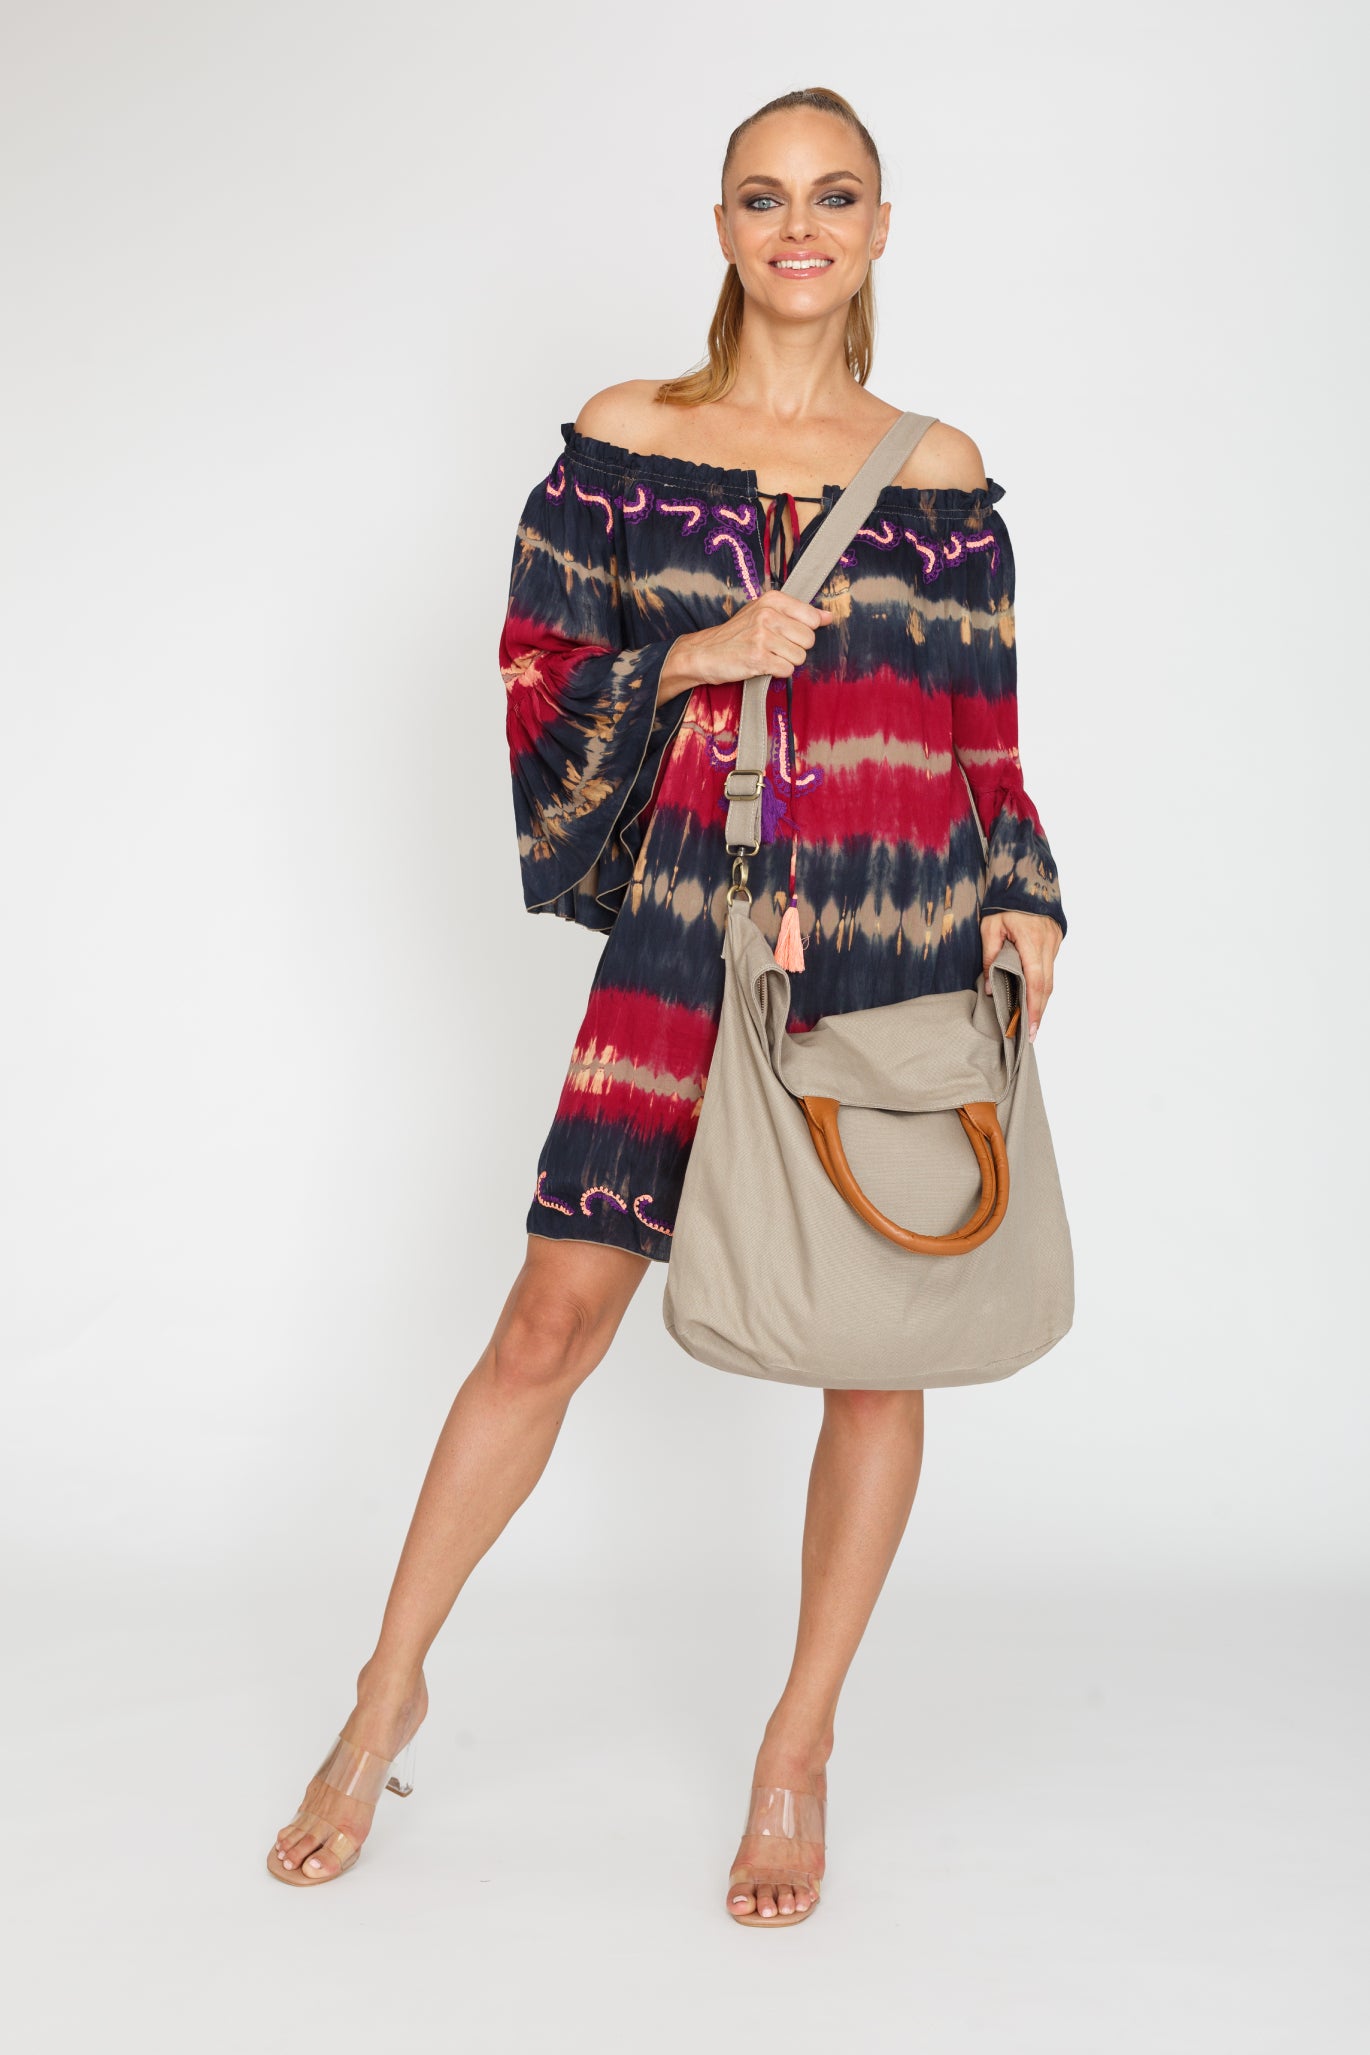 Canvas Shoulder Bag Valencia - Java Spirit Clothing & Women Accessories